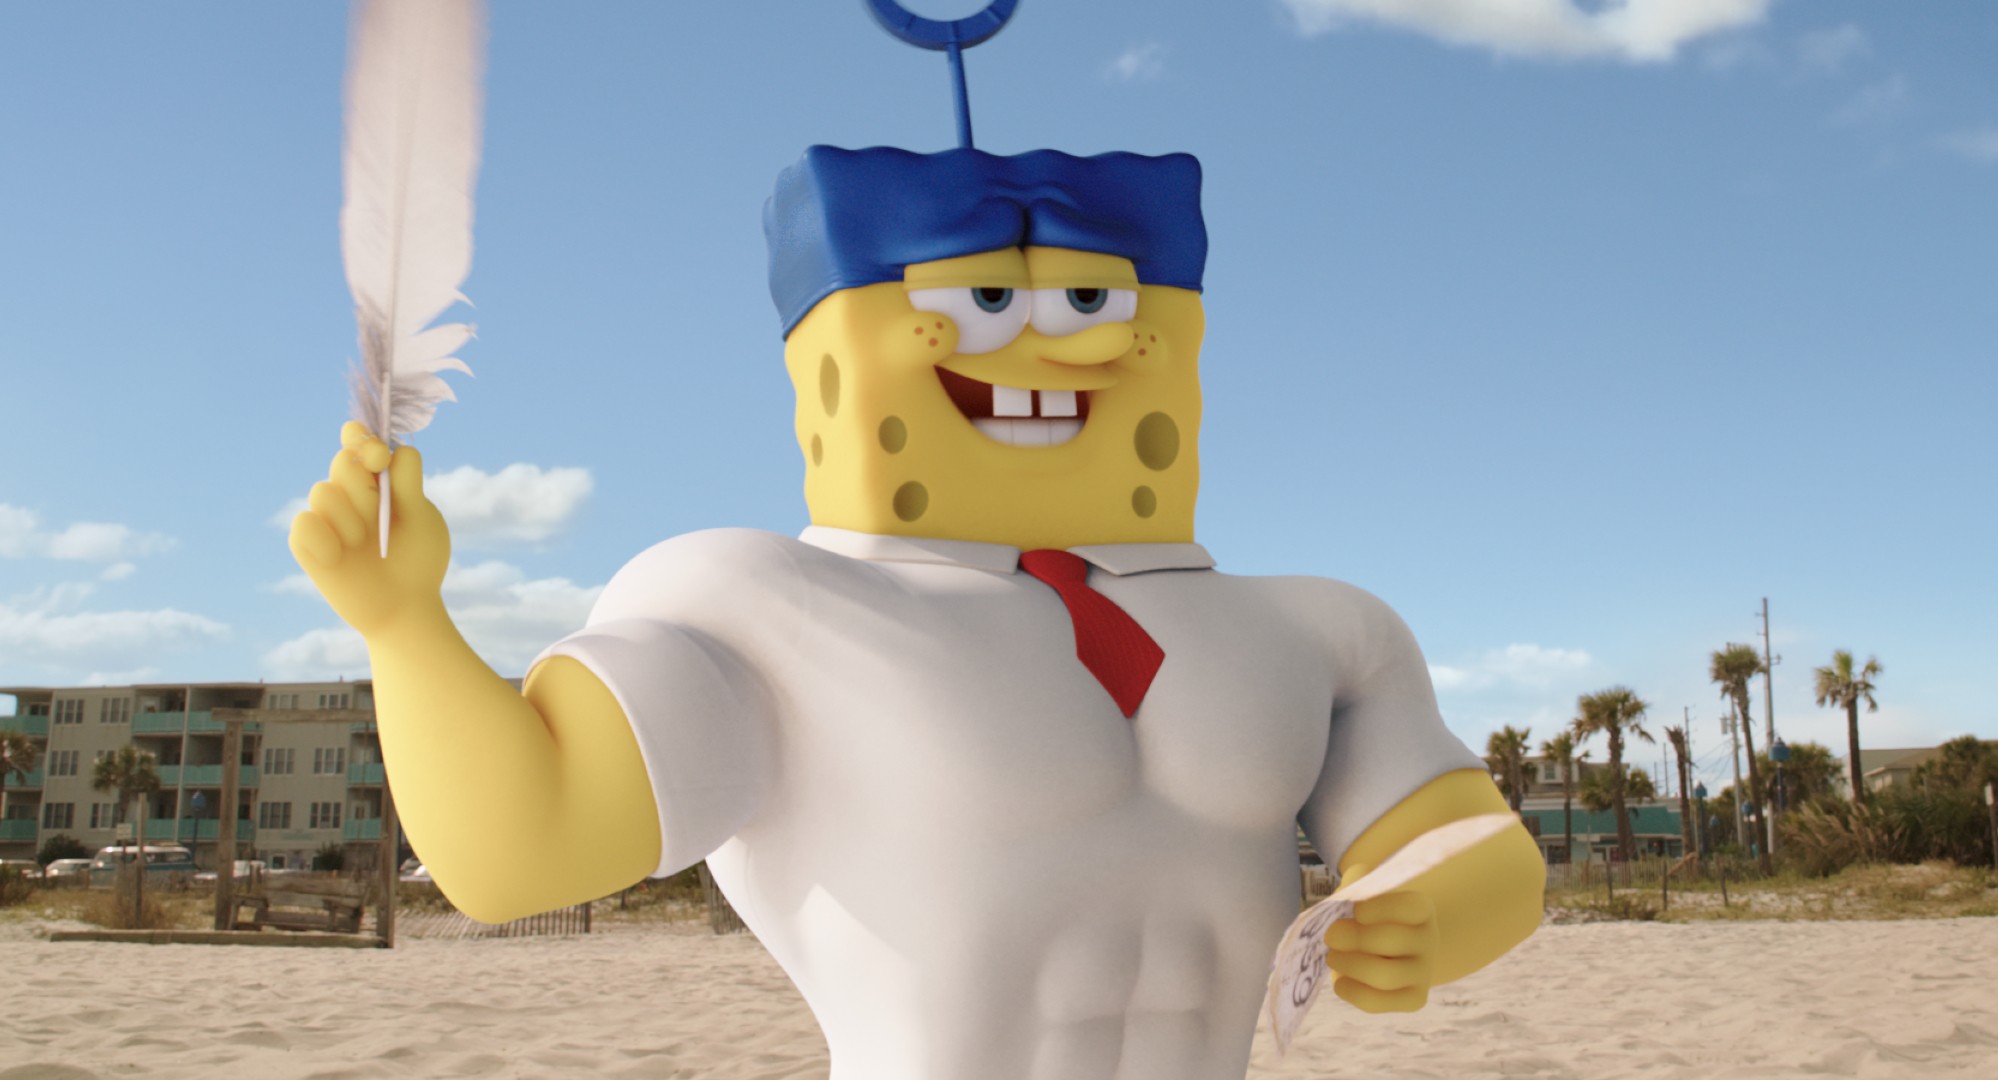 spongebob movie sponge out of water trailer